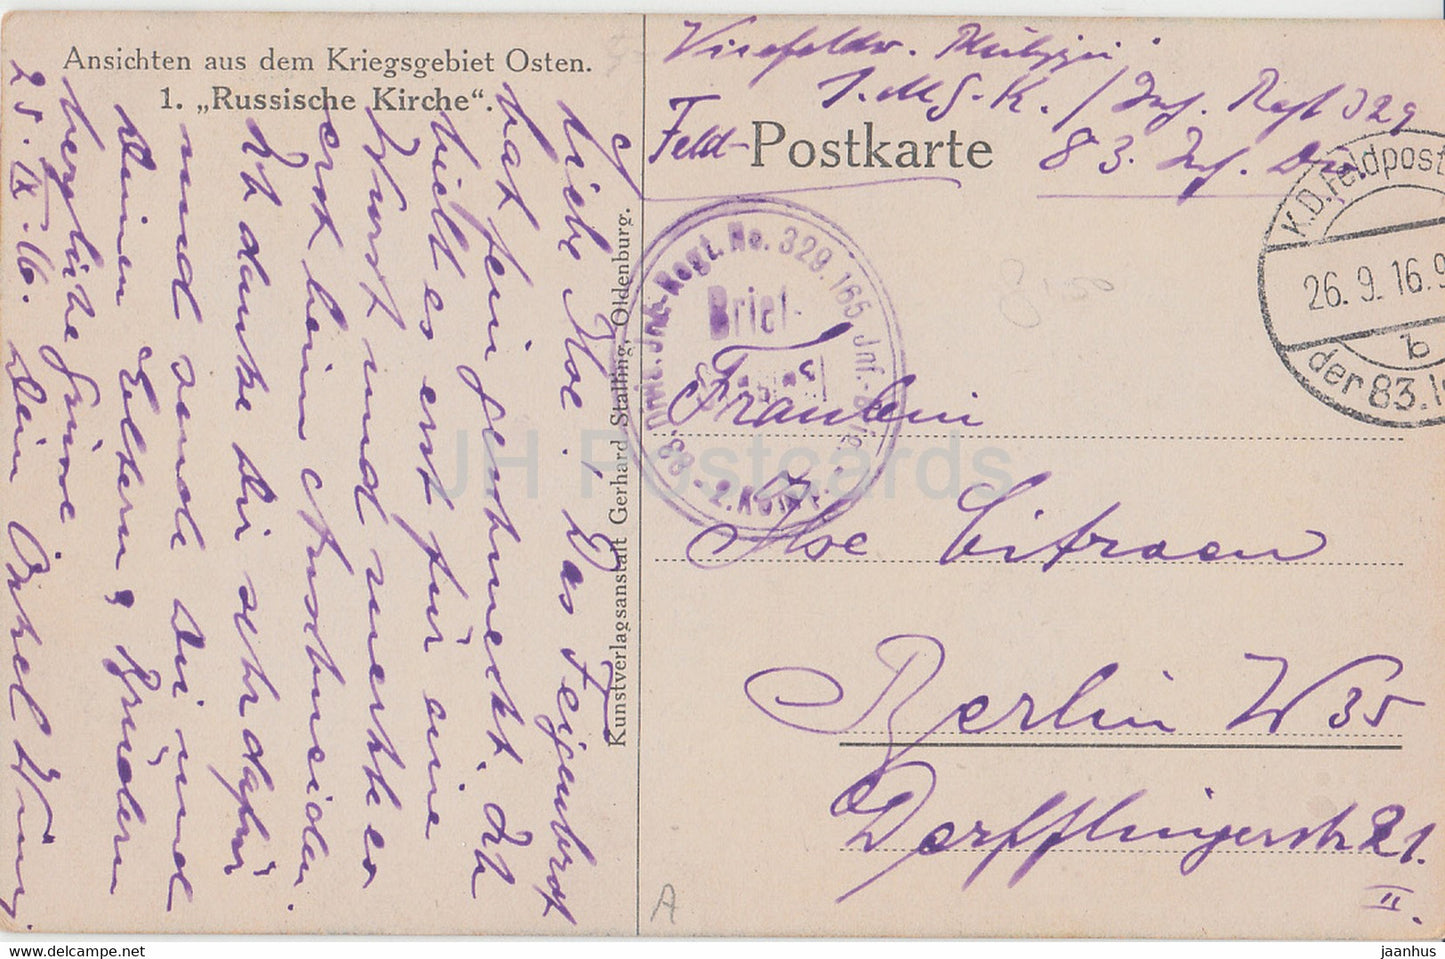 Ansichten aus dem Kriegsgebiet Osten - Russische Kirche - Kirche - Feldpost - alte Postkarte - 1916 - Russland - gebraucht